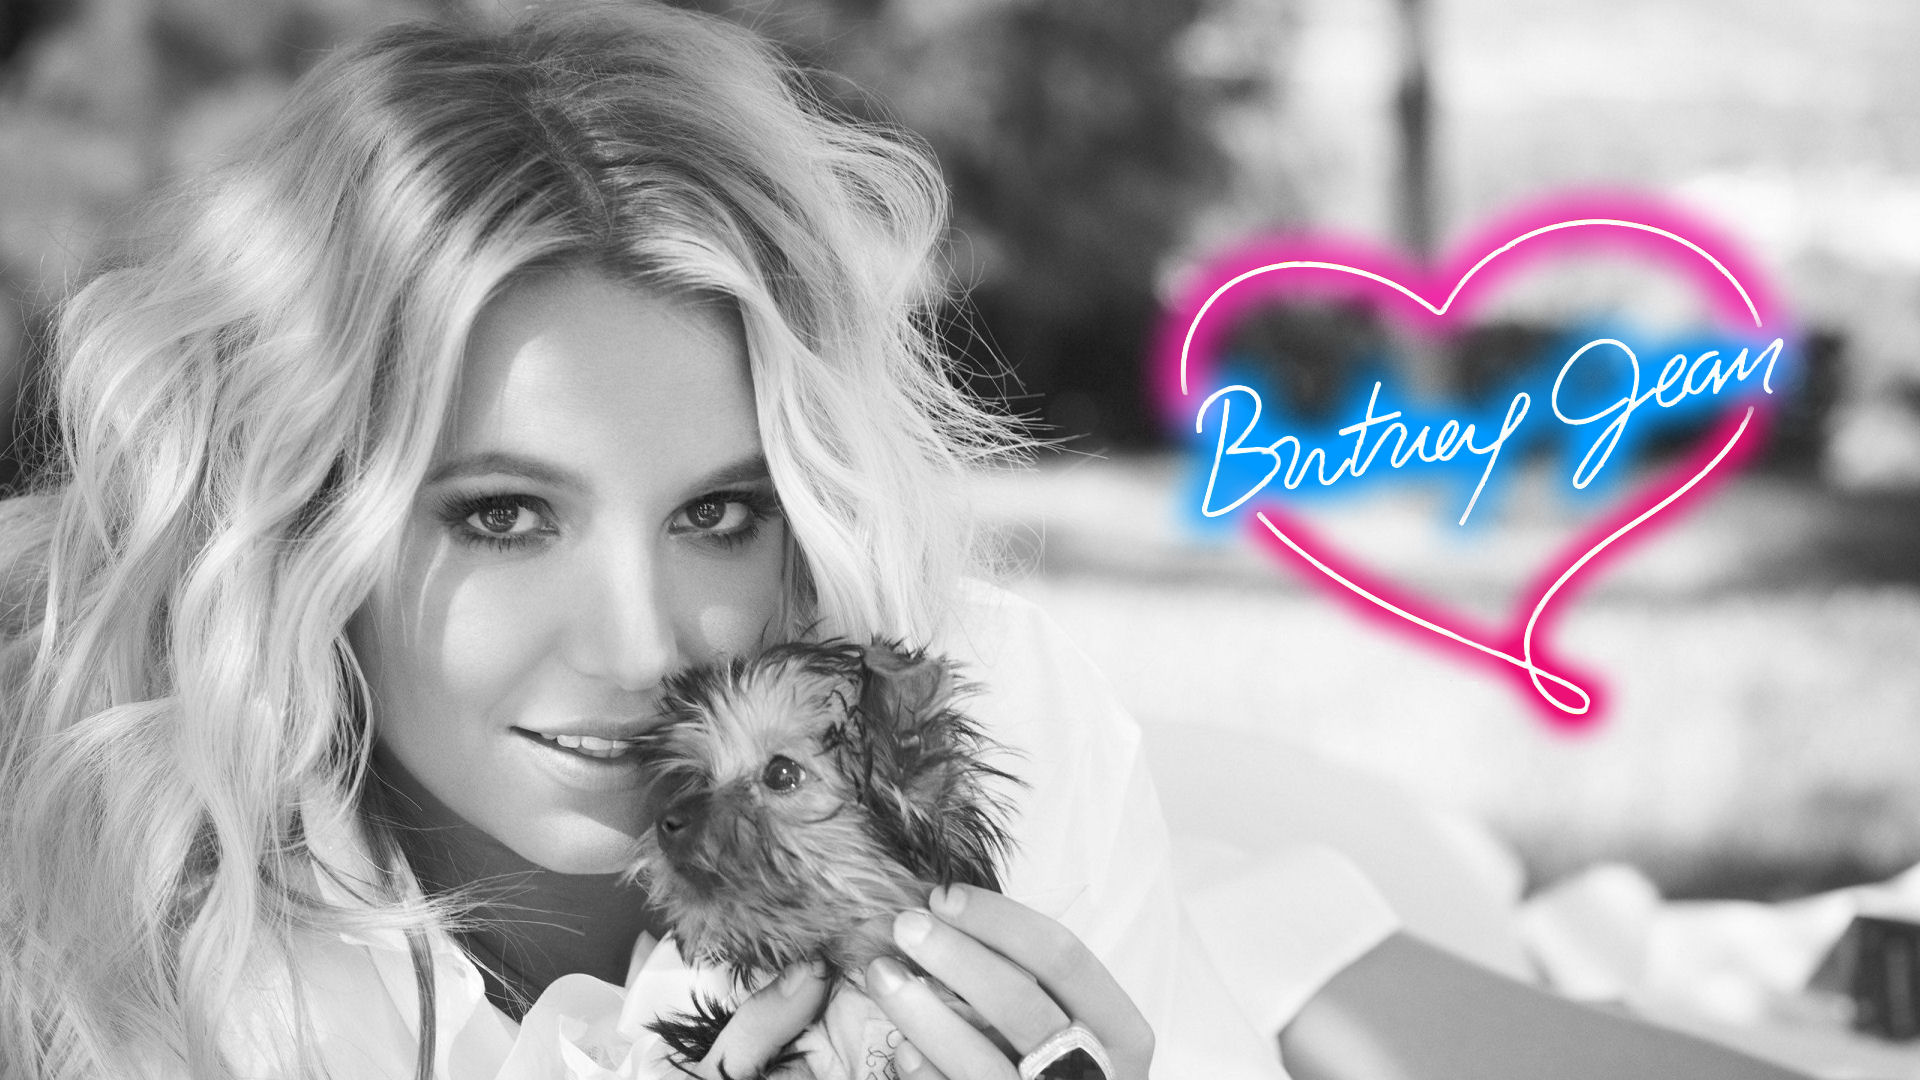 Britney jean album download